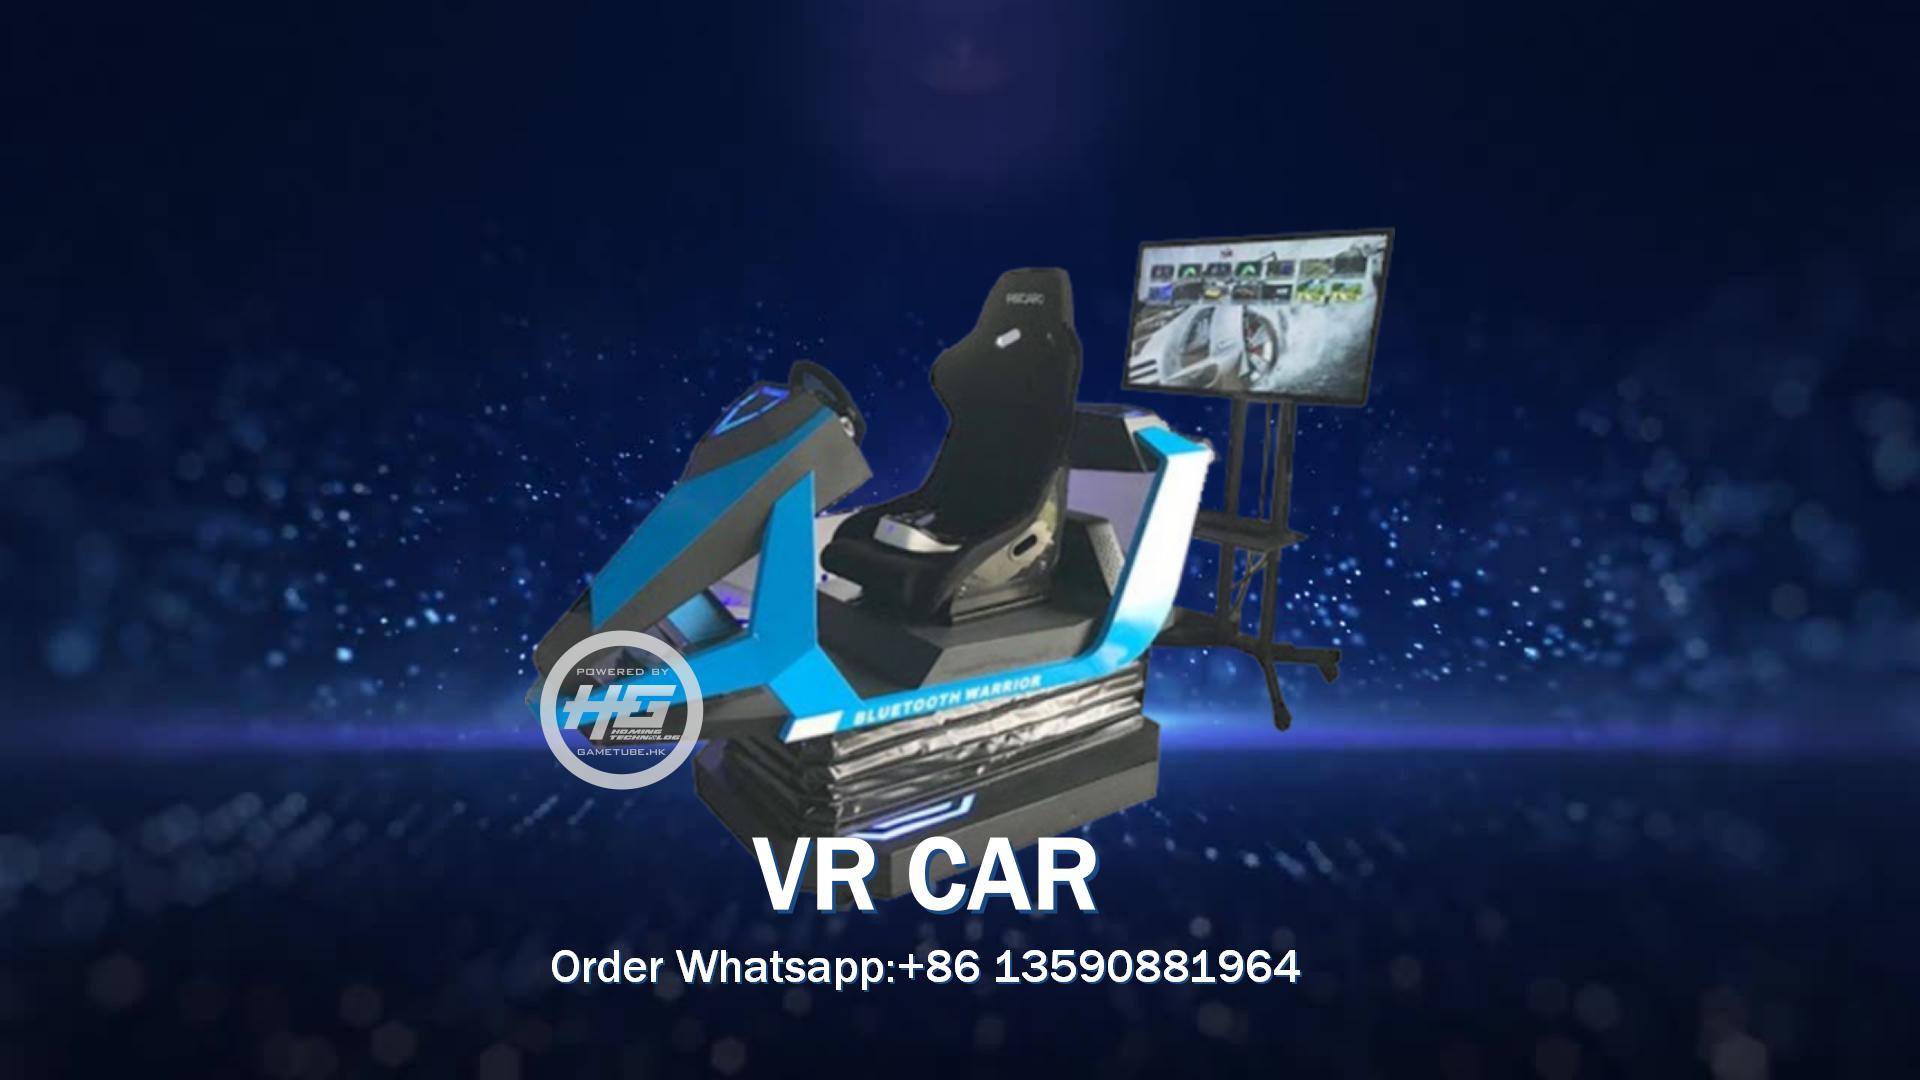 Newest 9D VR Simulator Games - 9D VR Car Racing Arcade Game,VR Car Game For Sale